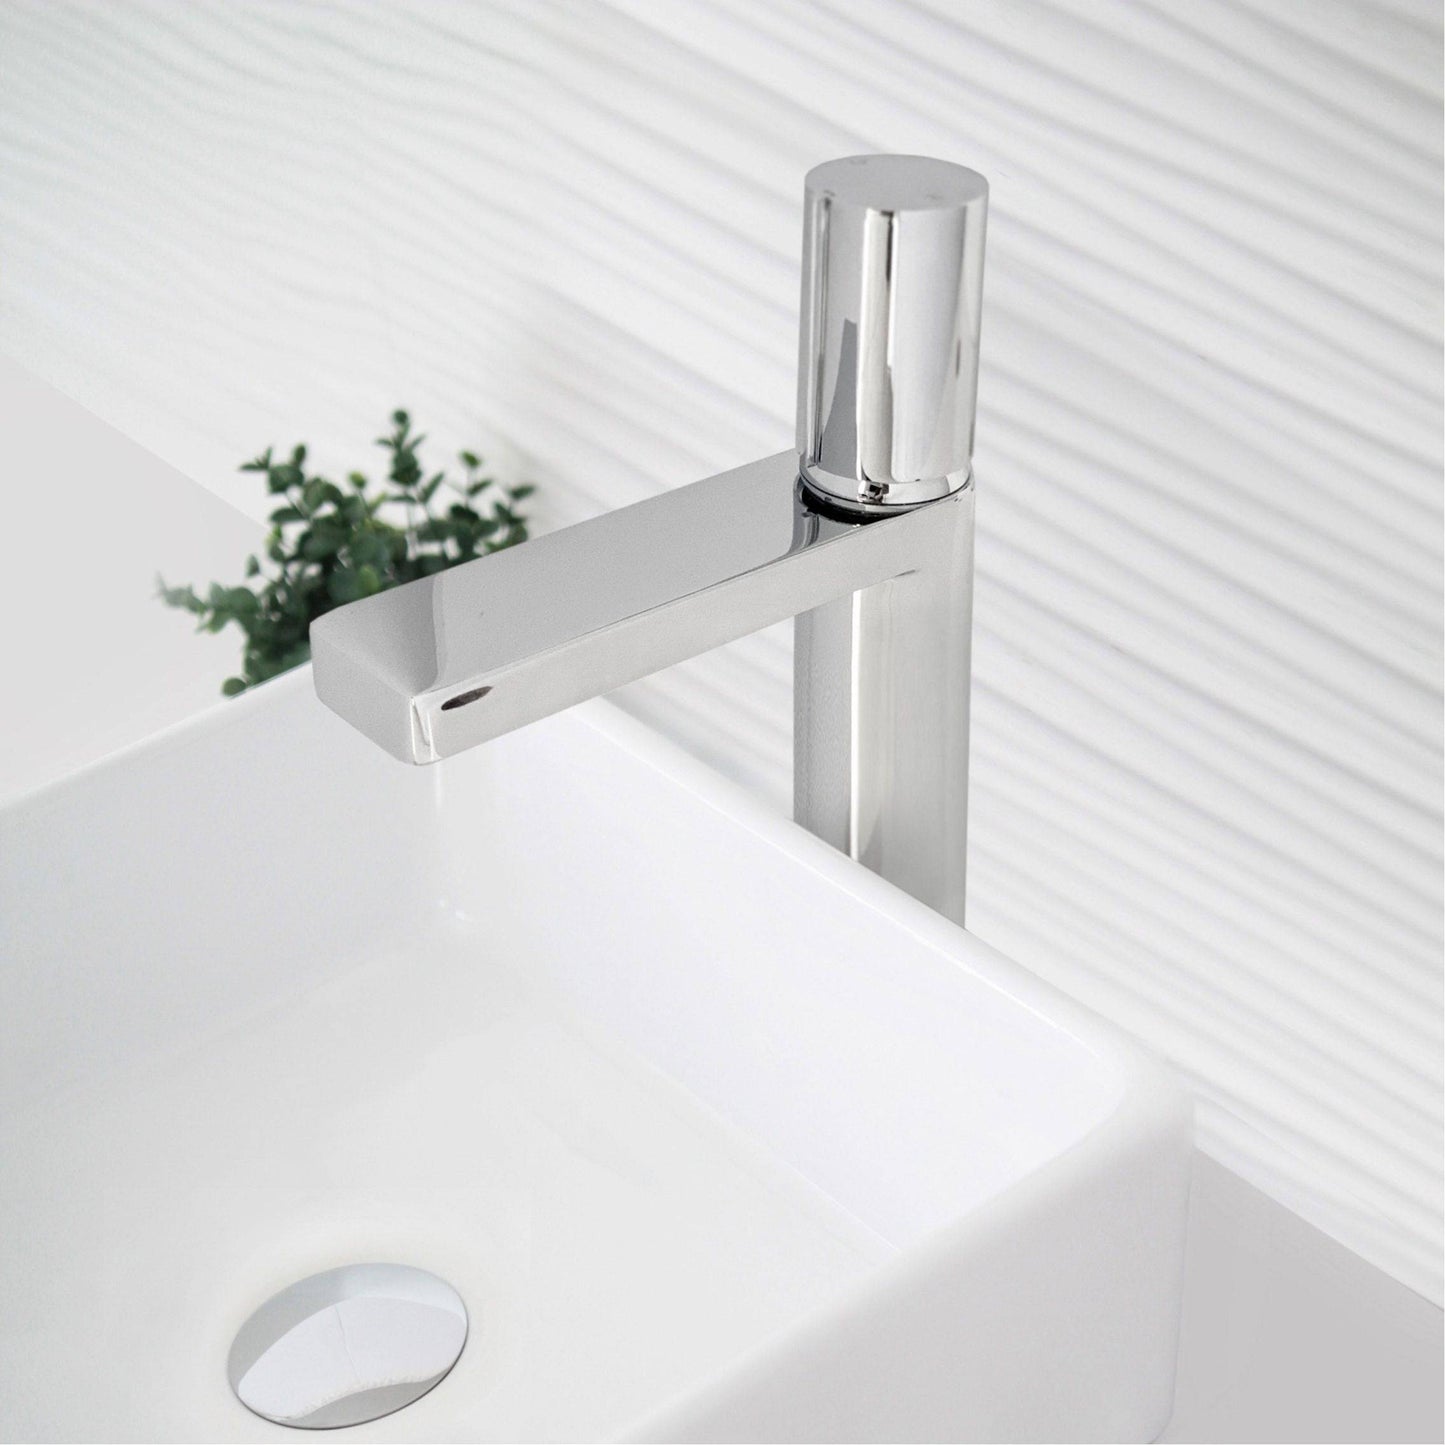 Stylish Nessa 12.5" Single Handle Bathroom Vessel Faucet, Polished Chrome Finish B-122C - Renoz